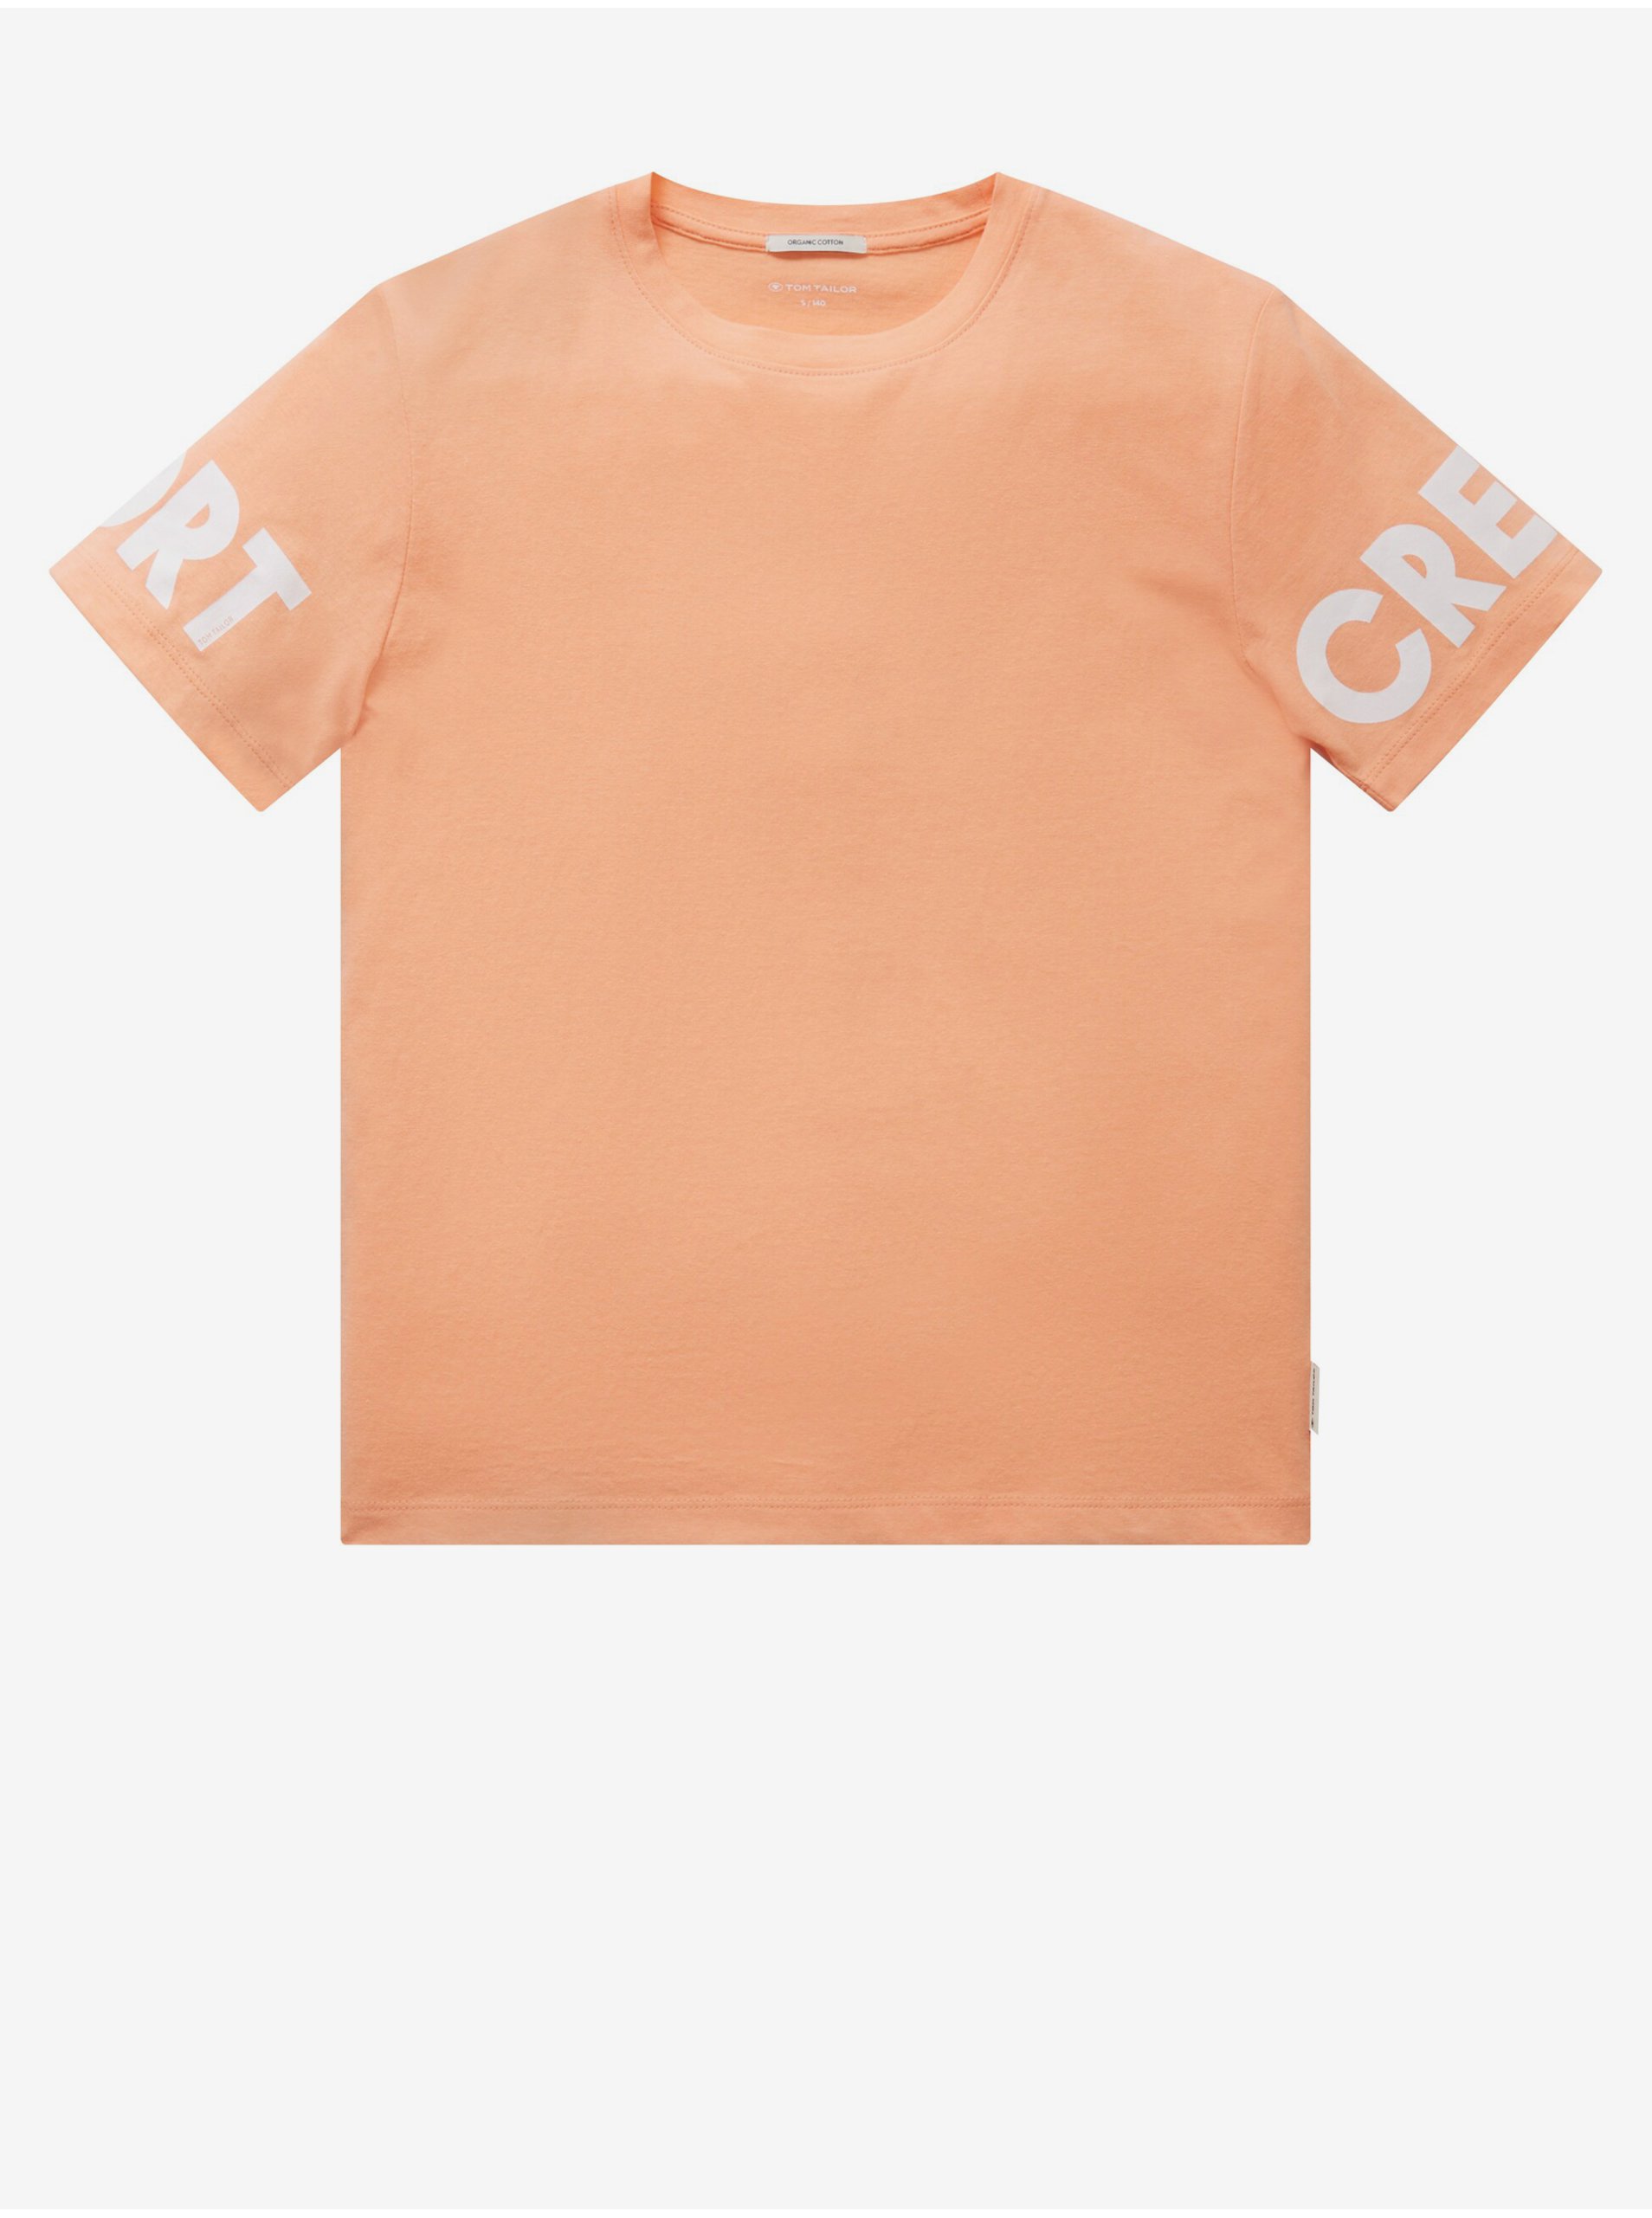 Apricot Boys T-Shirt Tom Tailor - Boys